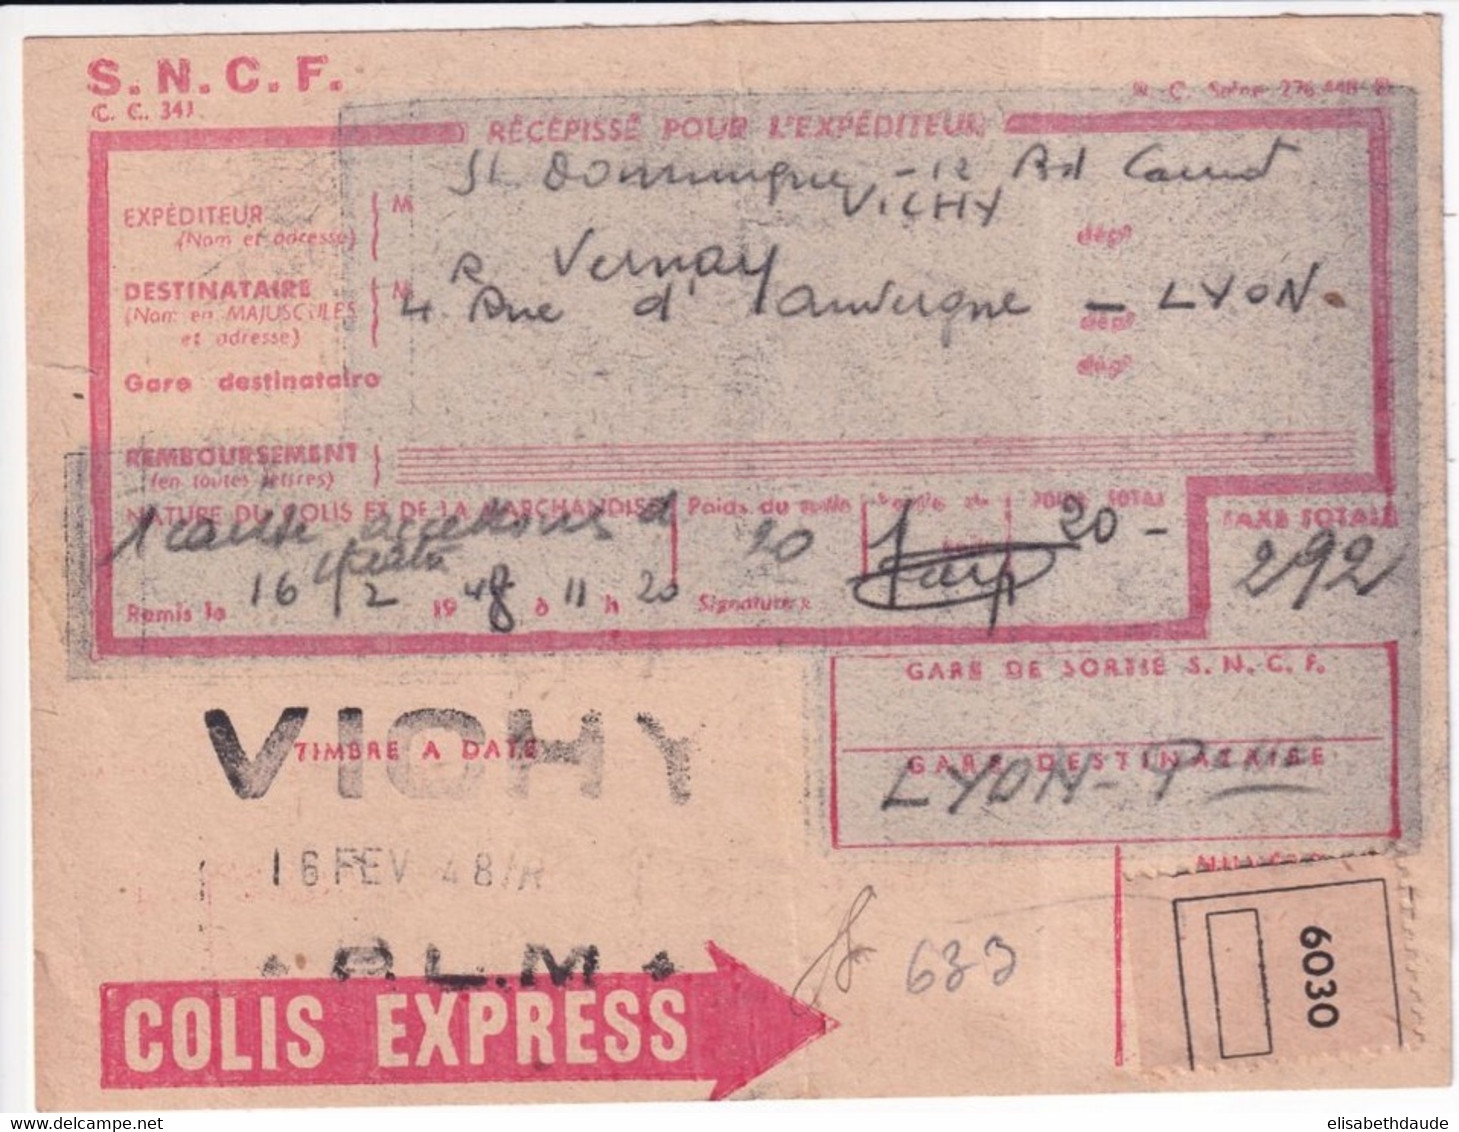 COLIS POSTAUX - 1948 - RECEPISSE COLIS EXPRESS ! De VICHY (ALLIER) => LYON - Briefe U. Dokumente